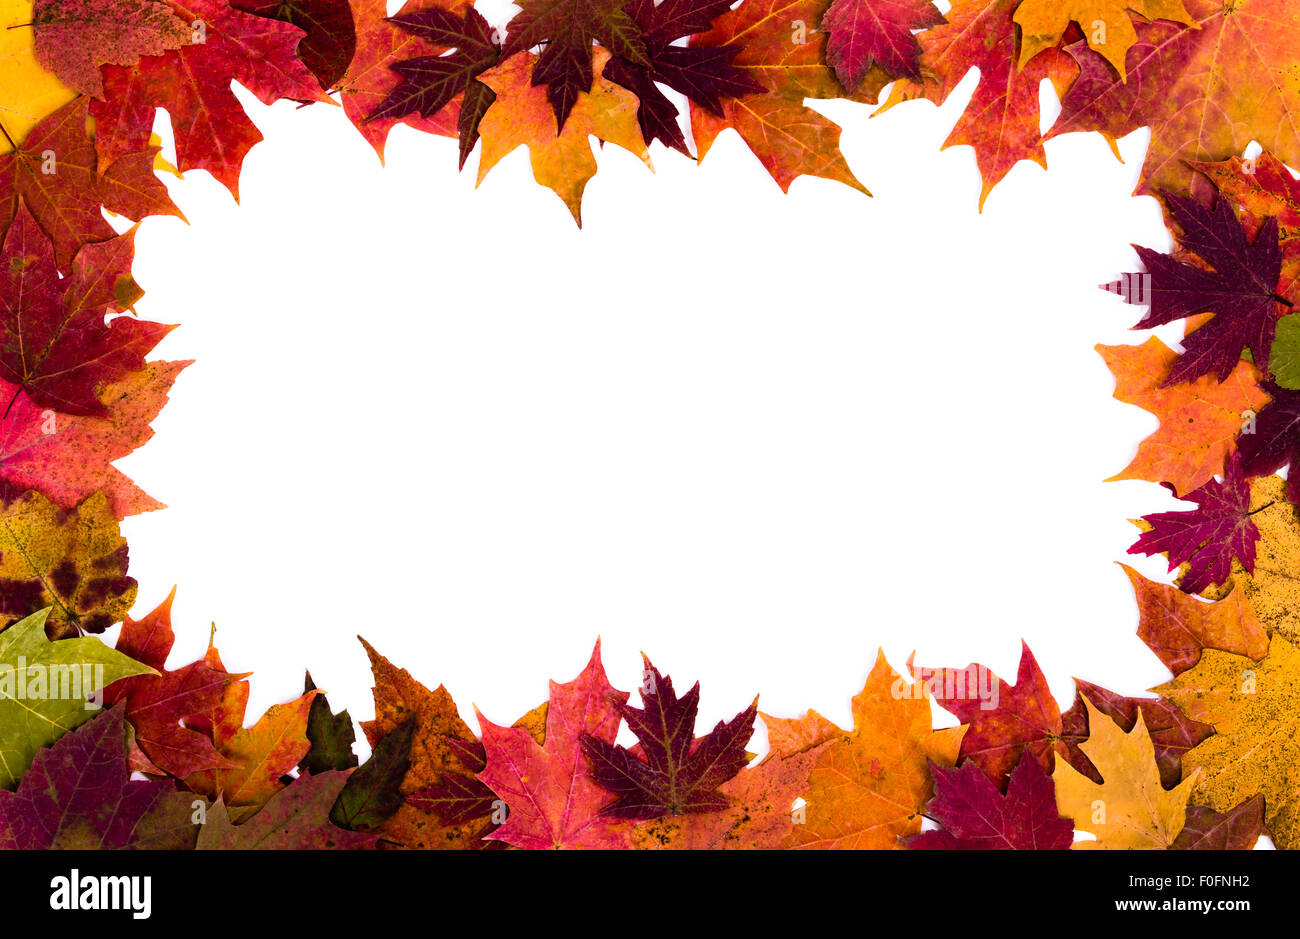 Colorful autumn leaves border on white background Stock Photo